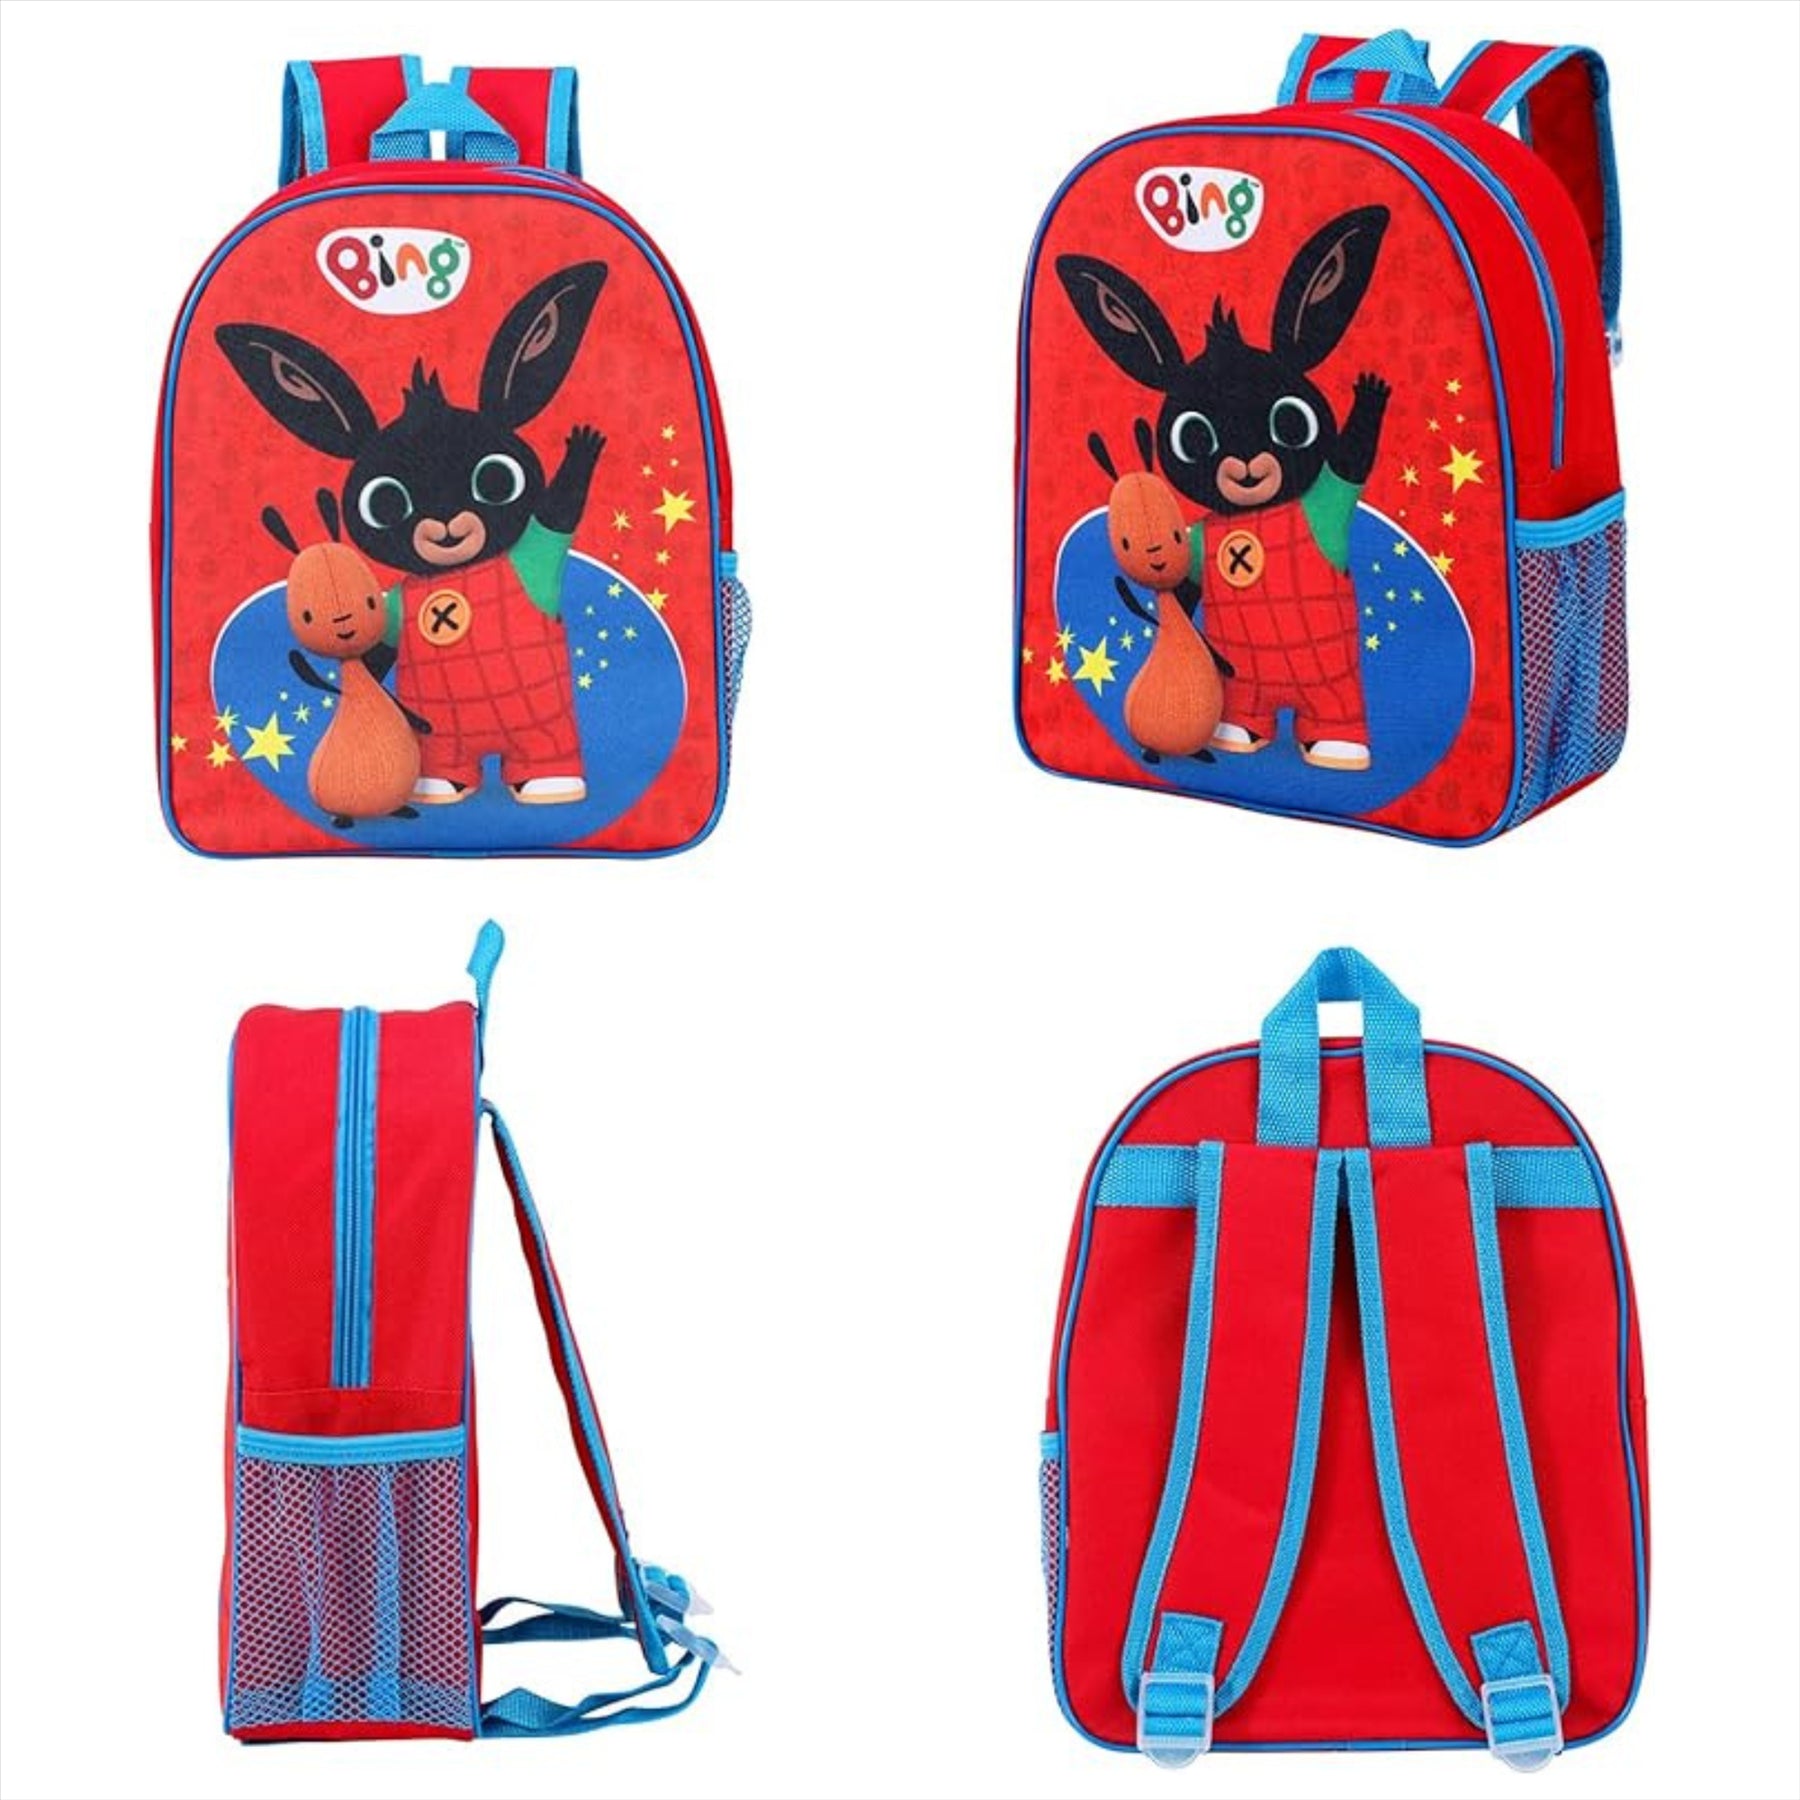 Bing Bunny Junior Backpack - Kids Character School Bag with Mesh Side Pocket - Toptoys2u